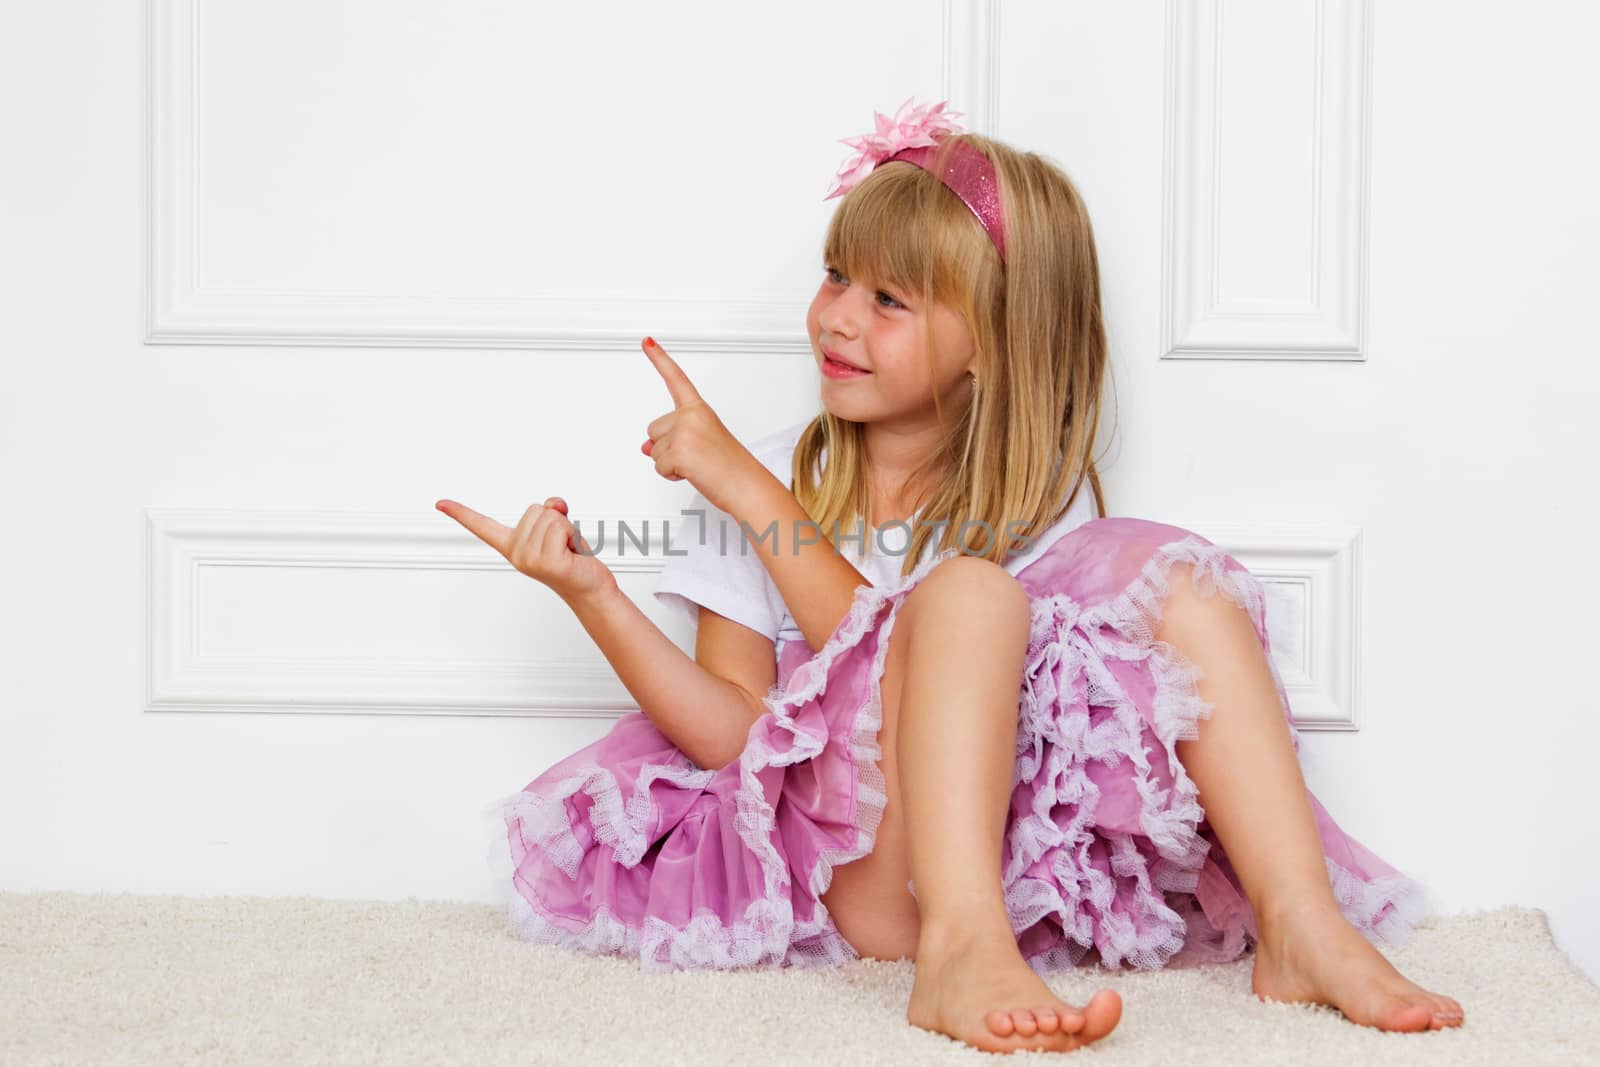 Little girl in a beautiful dress sits near a wall